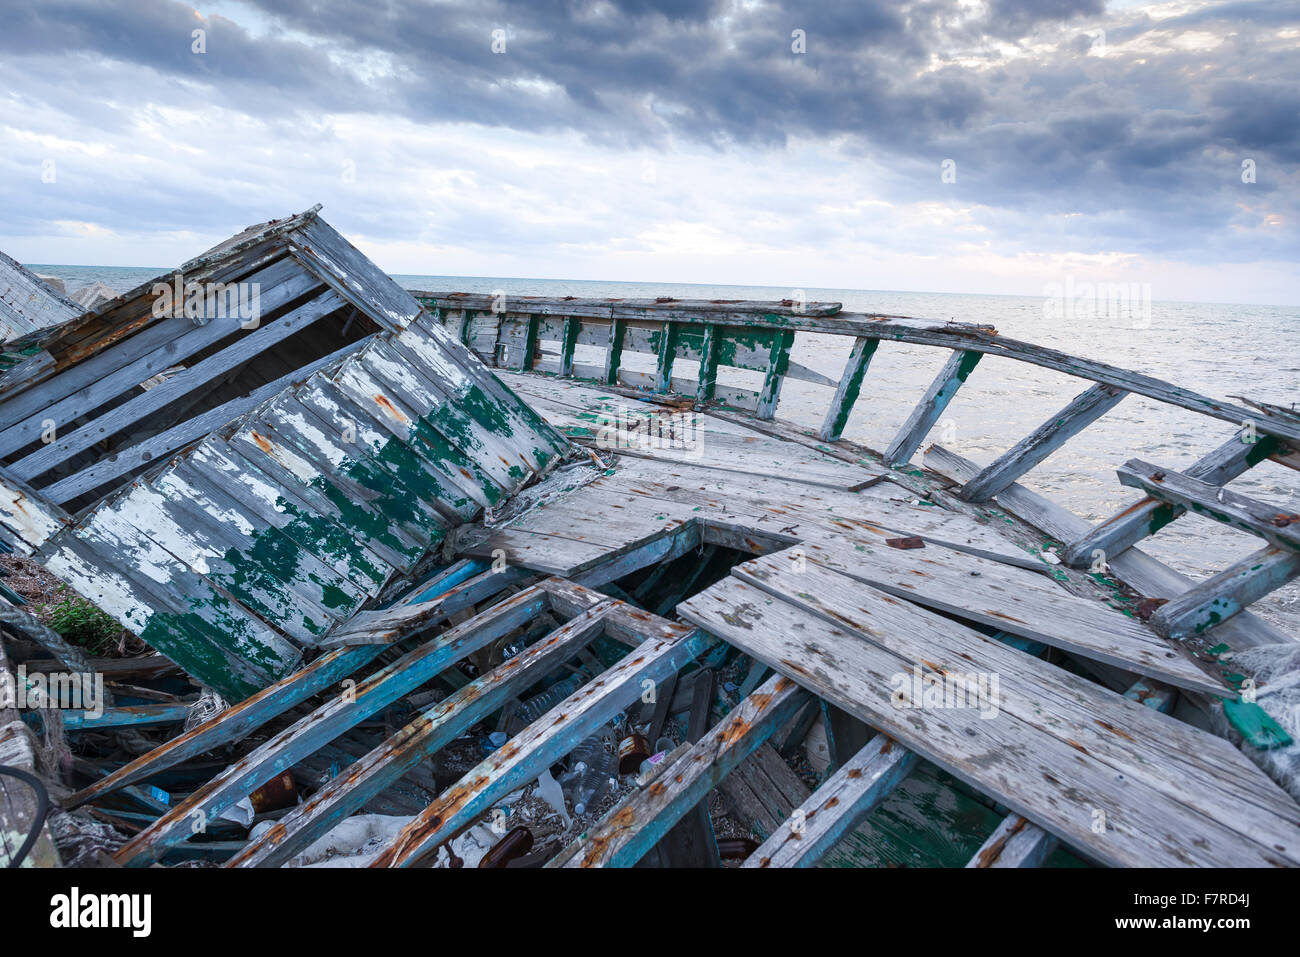 Verlassenes Flüchtlingsboot, Blick auf ein verlassenes Flüchtlingsboot, das dem Verfall überlassen wurde, neben der Meeresmauer in Marsala, Sizilien. Stockfoto